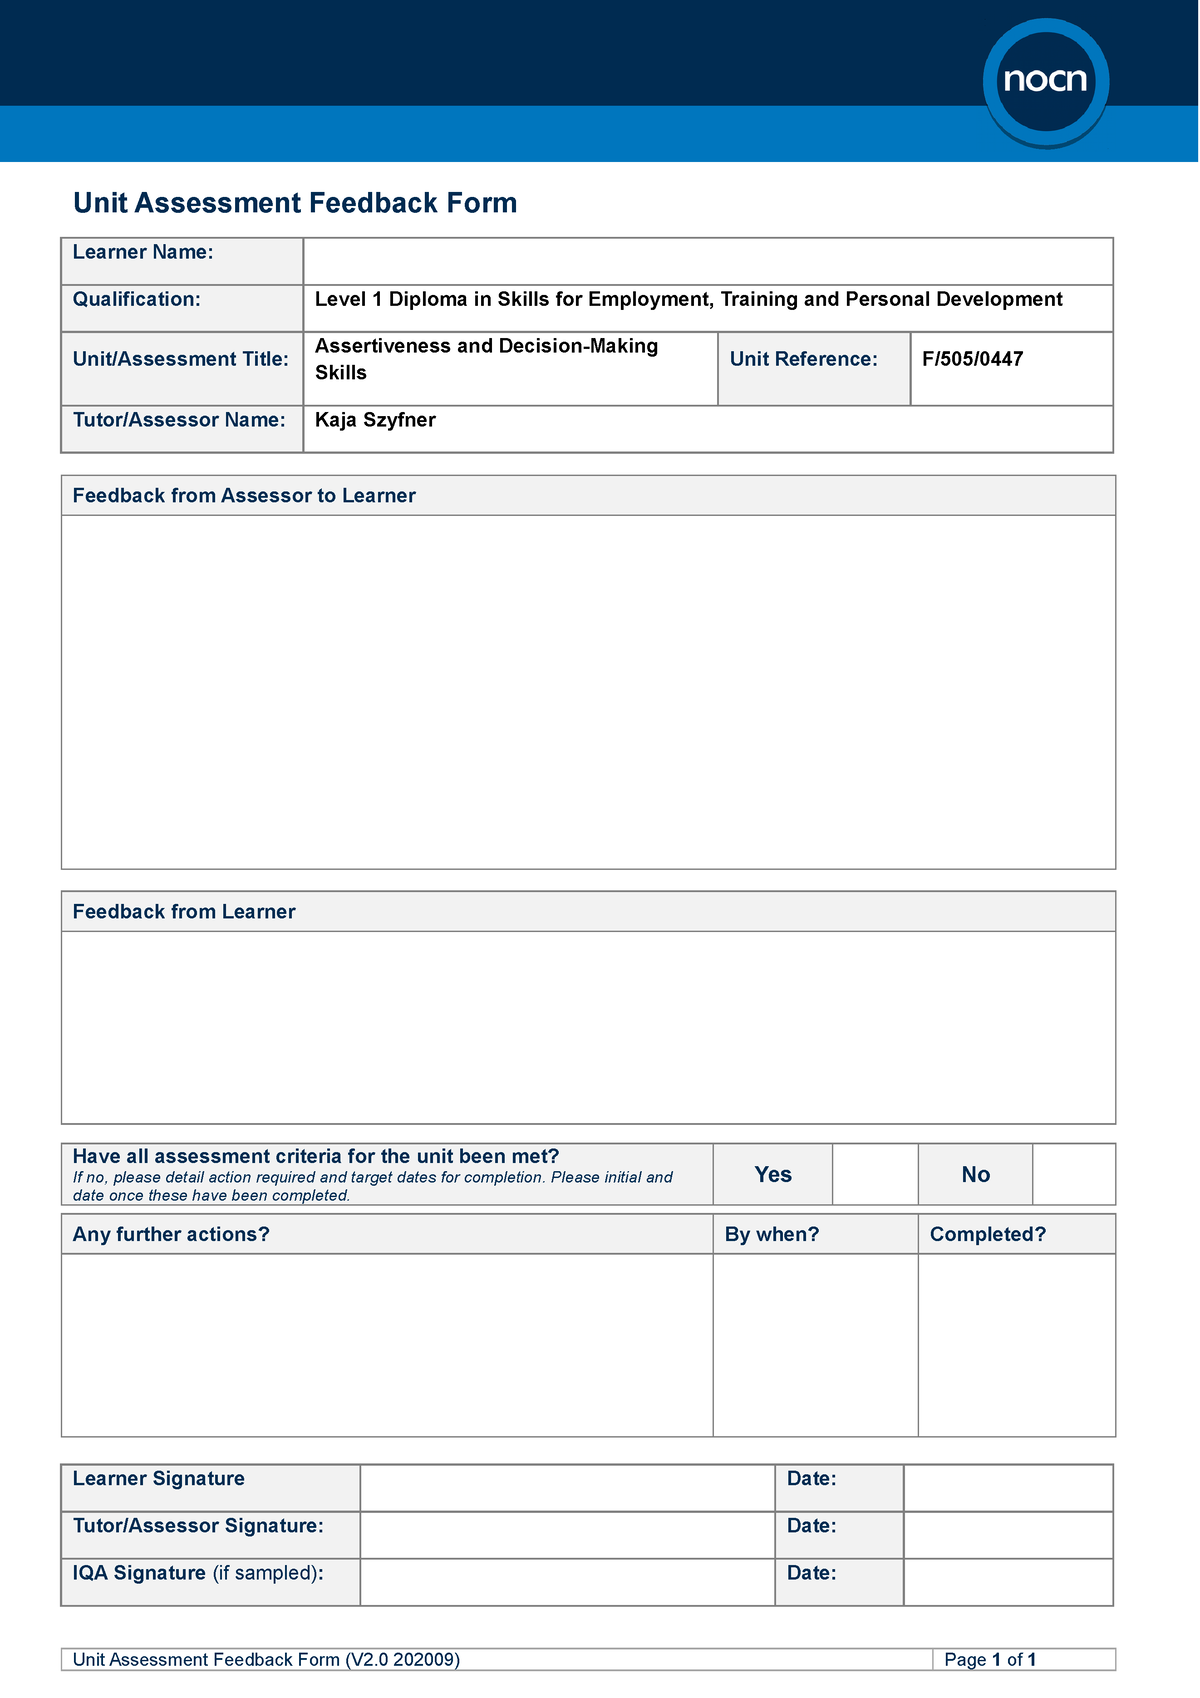 Assertiveness Assessment Feedback Form(V2 - Unit Assessment Feedback ...